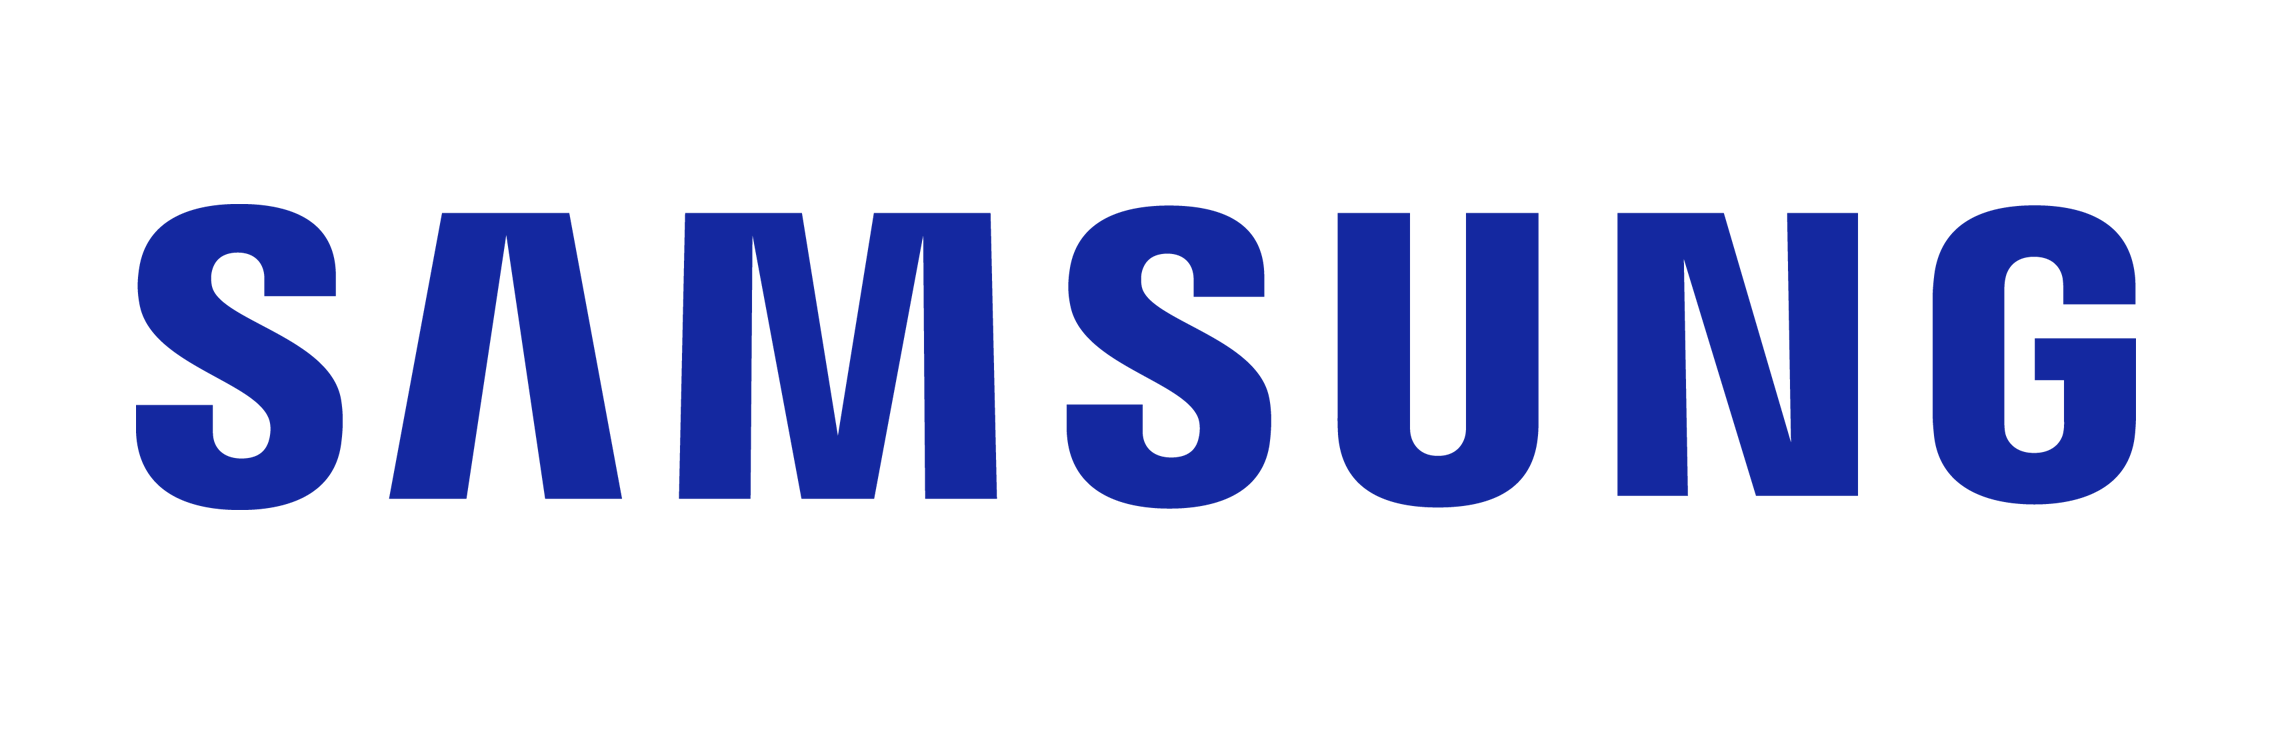 logo samsung